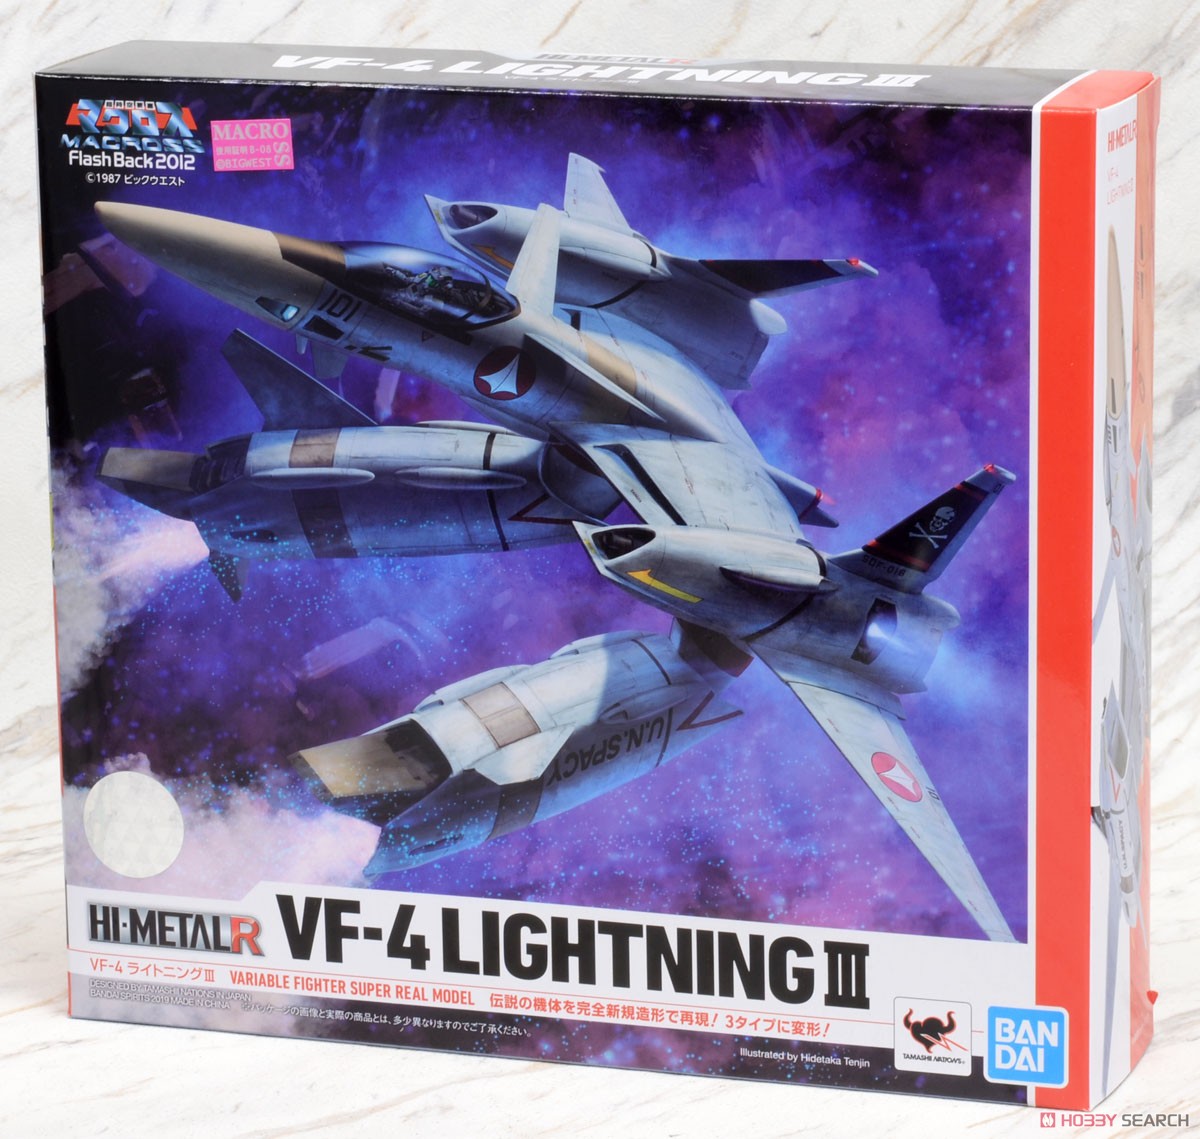 HI-METAL R VF-4 ライトニングIII (完成品) パッケージ1